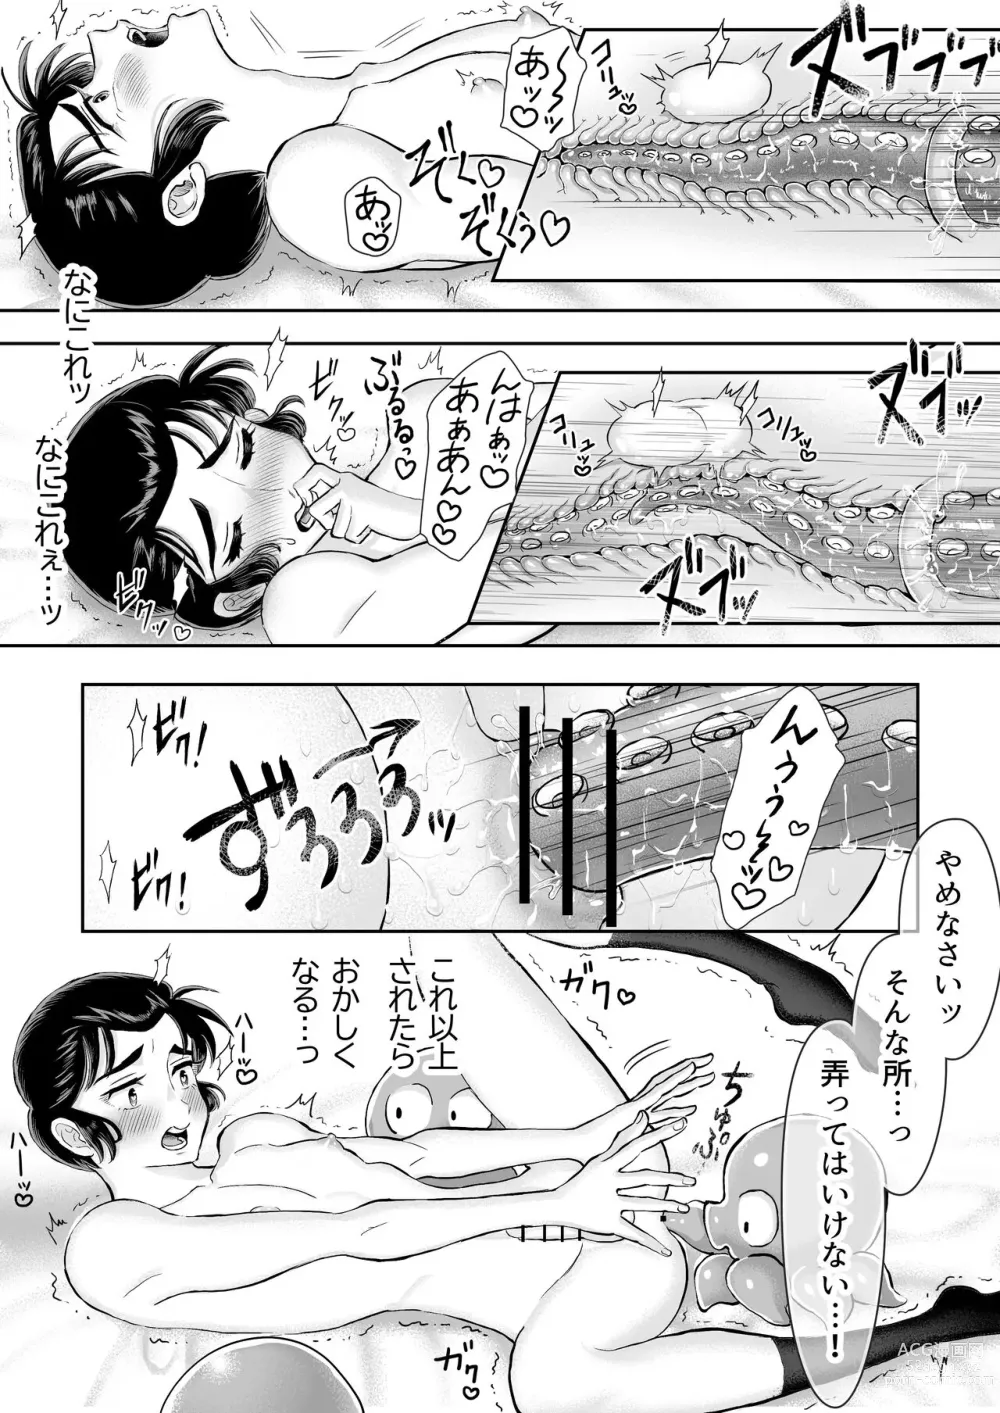 Page 3 of doujinshi Shokushu Kan Manga